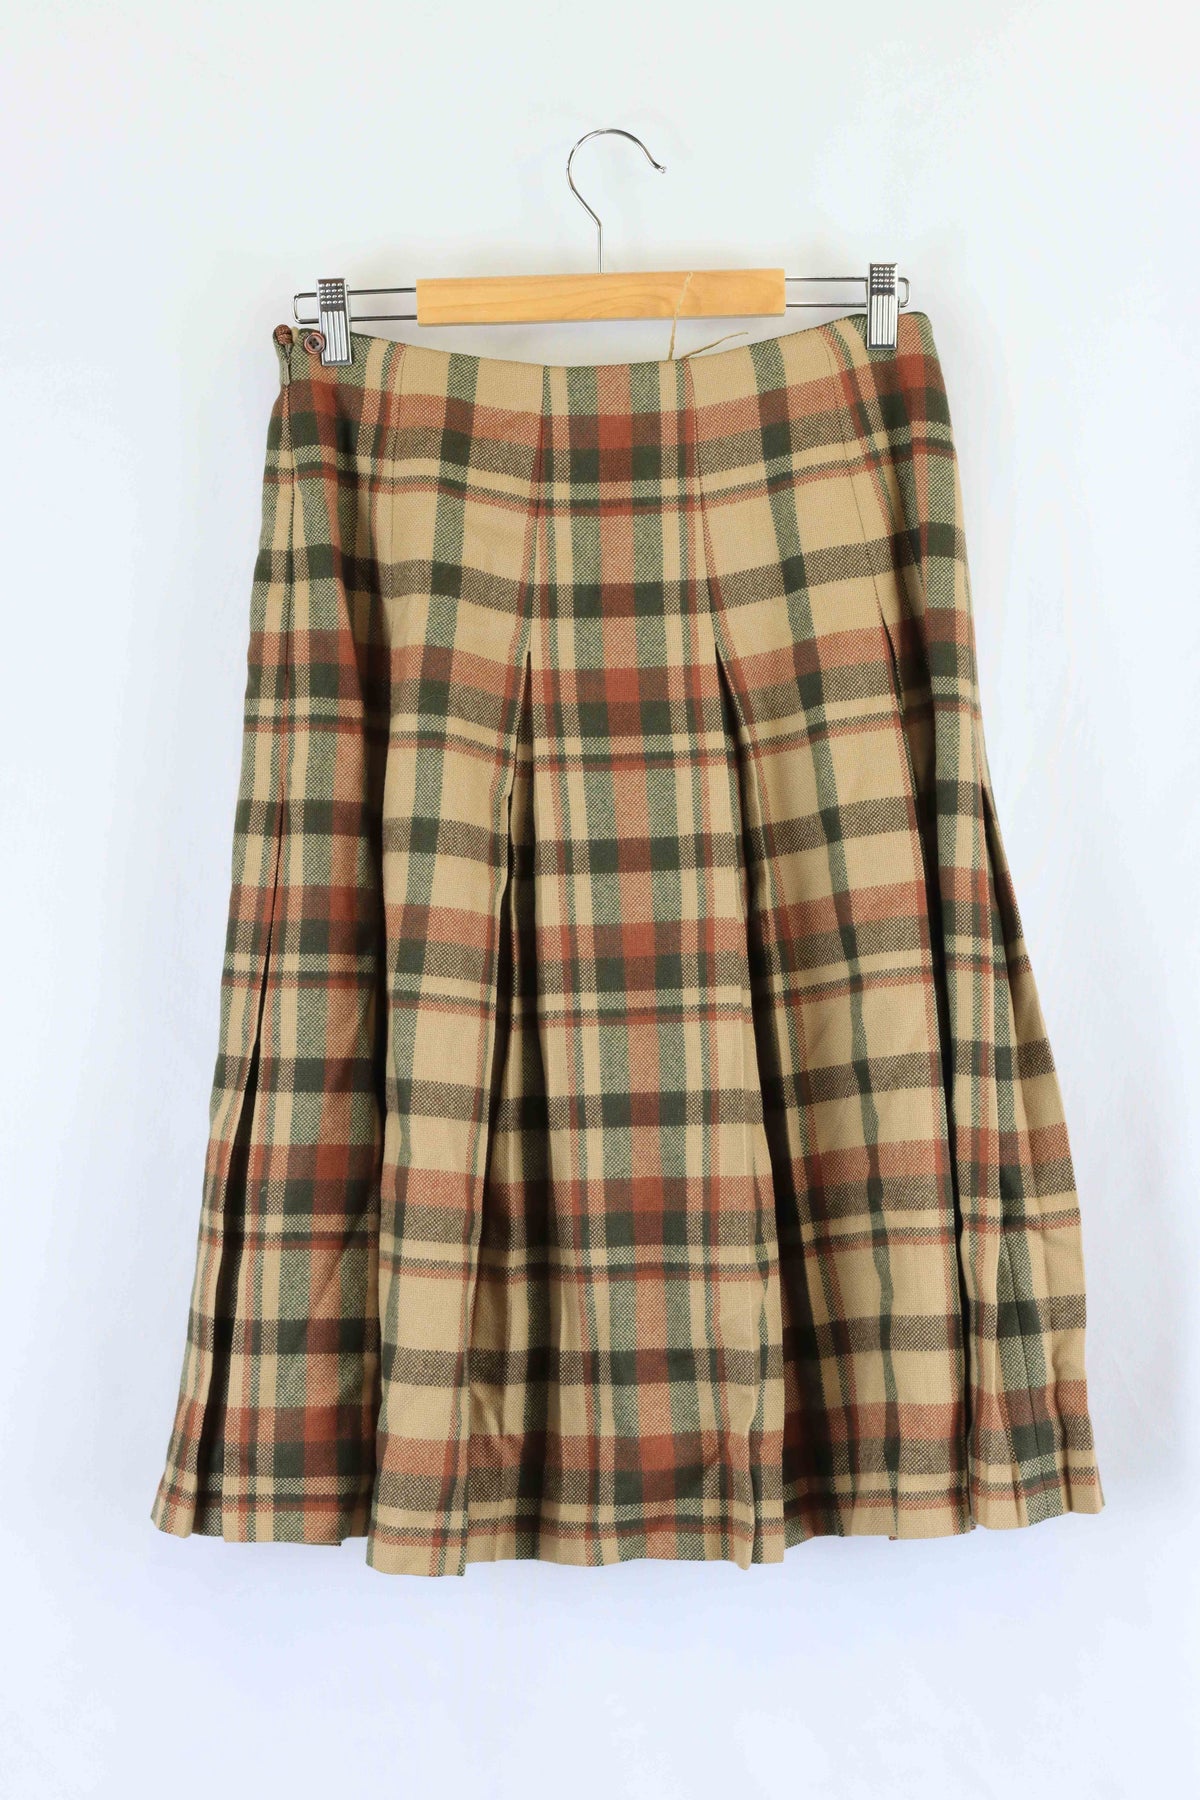 Fletcher Jones Vintage Brown Wool Check Skirt 16